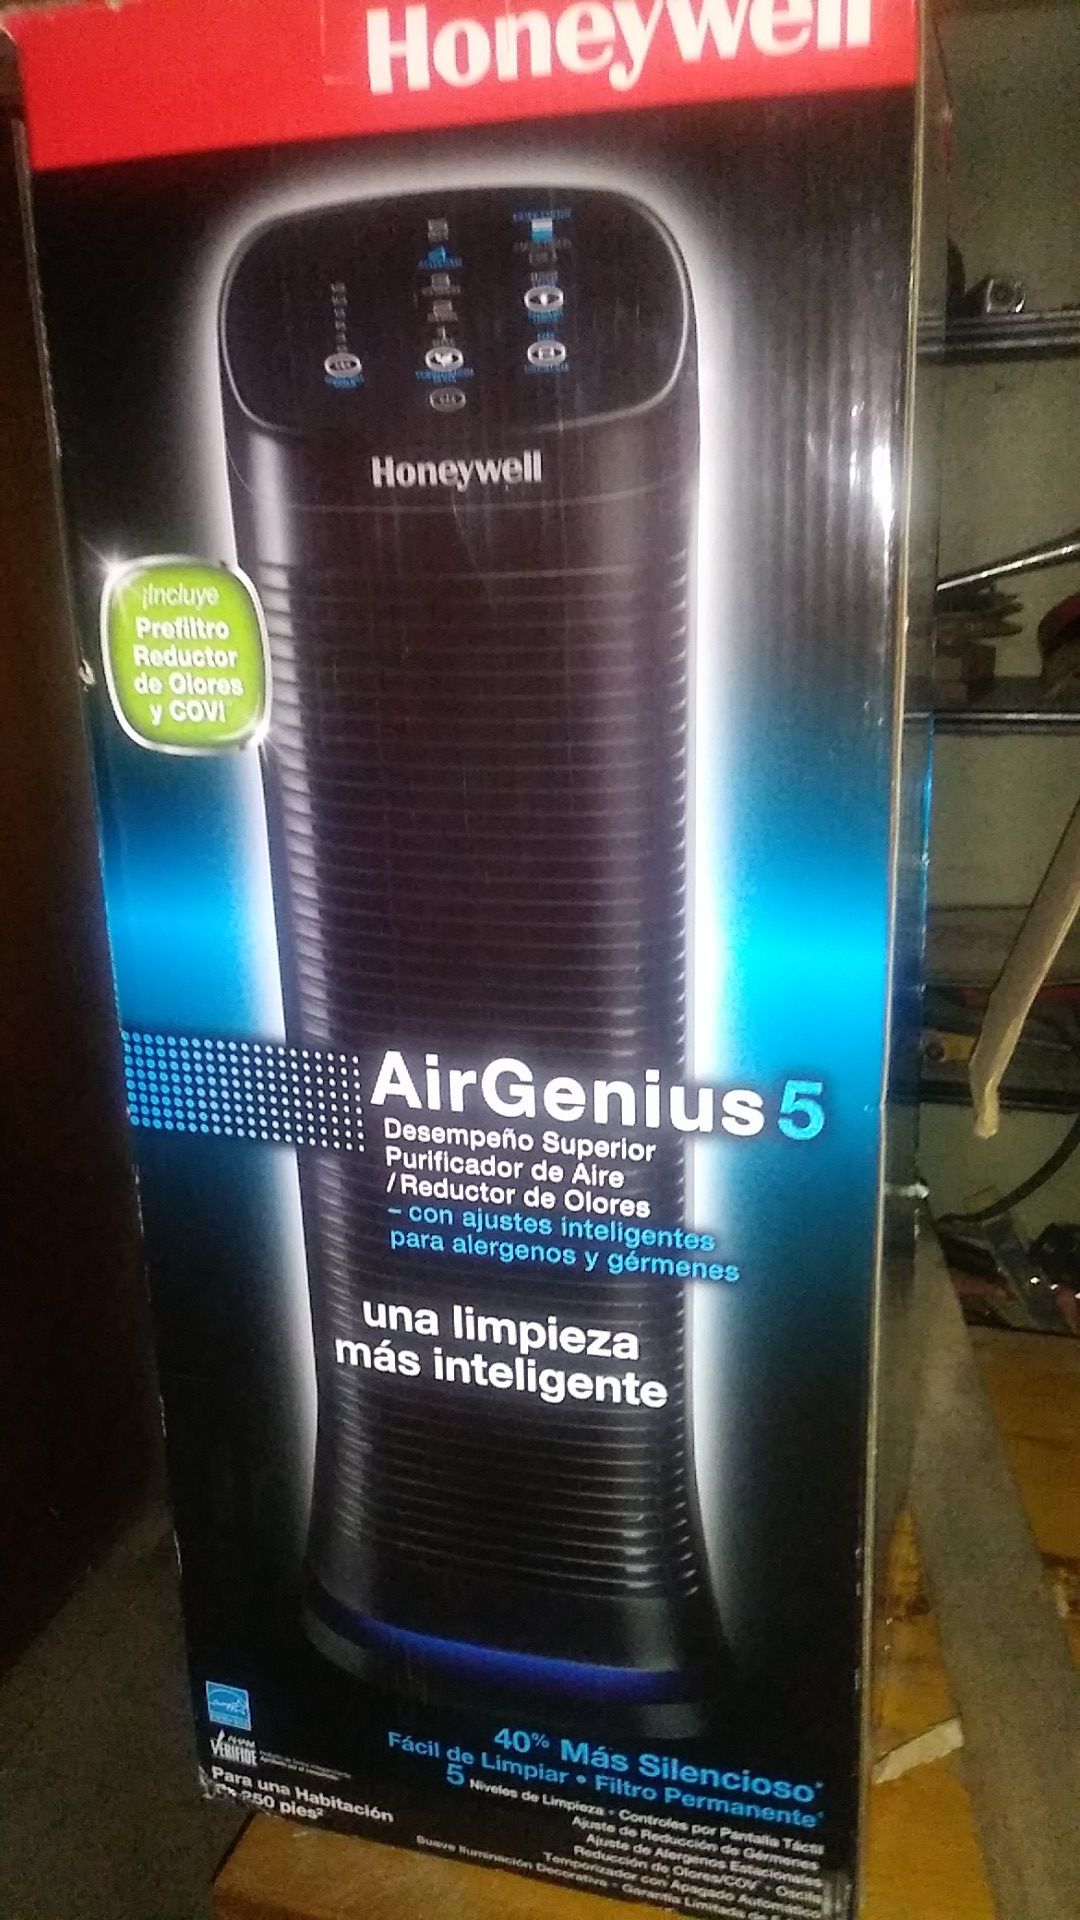 Honeywell air genious 5 purifier